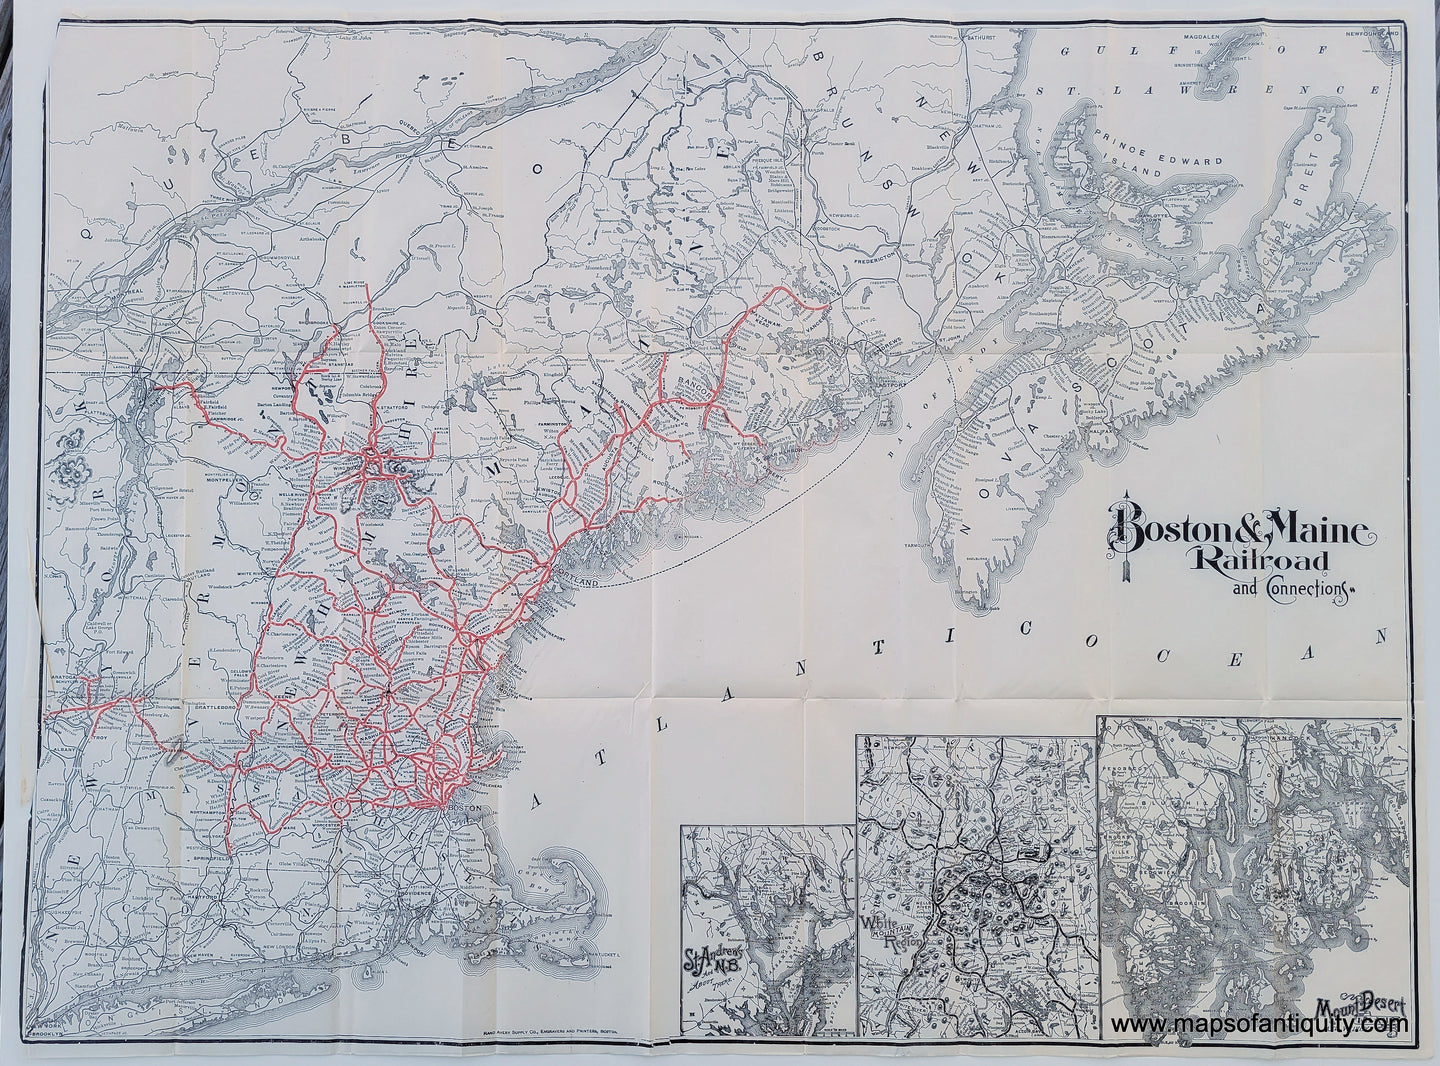 Genuine-Antique-Folding-Railroad-Map-Boston-&-Maine-Railroad-and-Connections-c.-1900-Boston-&-Maine-Railroad-Maps-Of-Antiquity